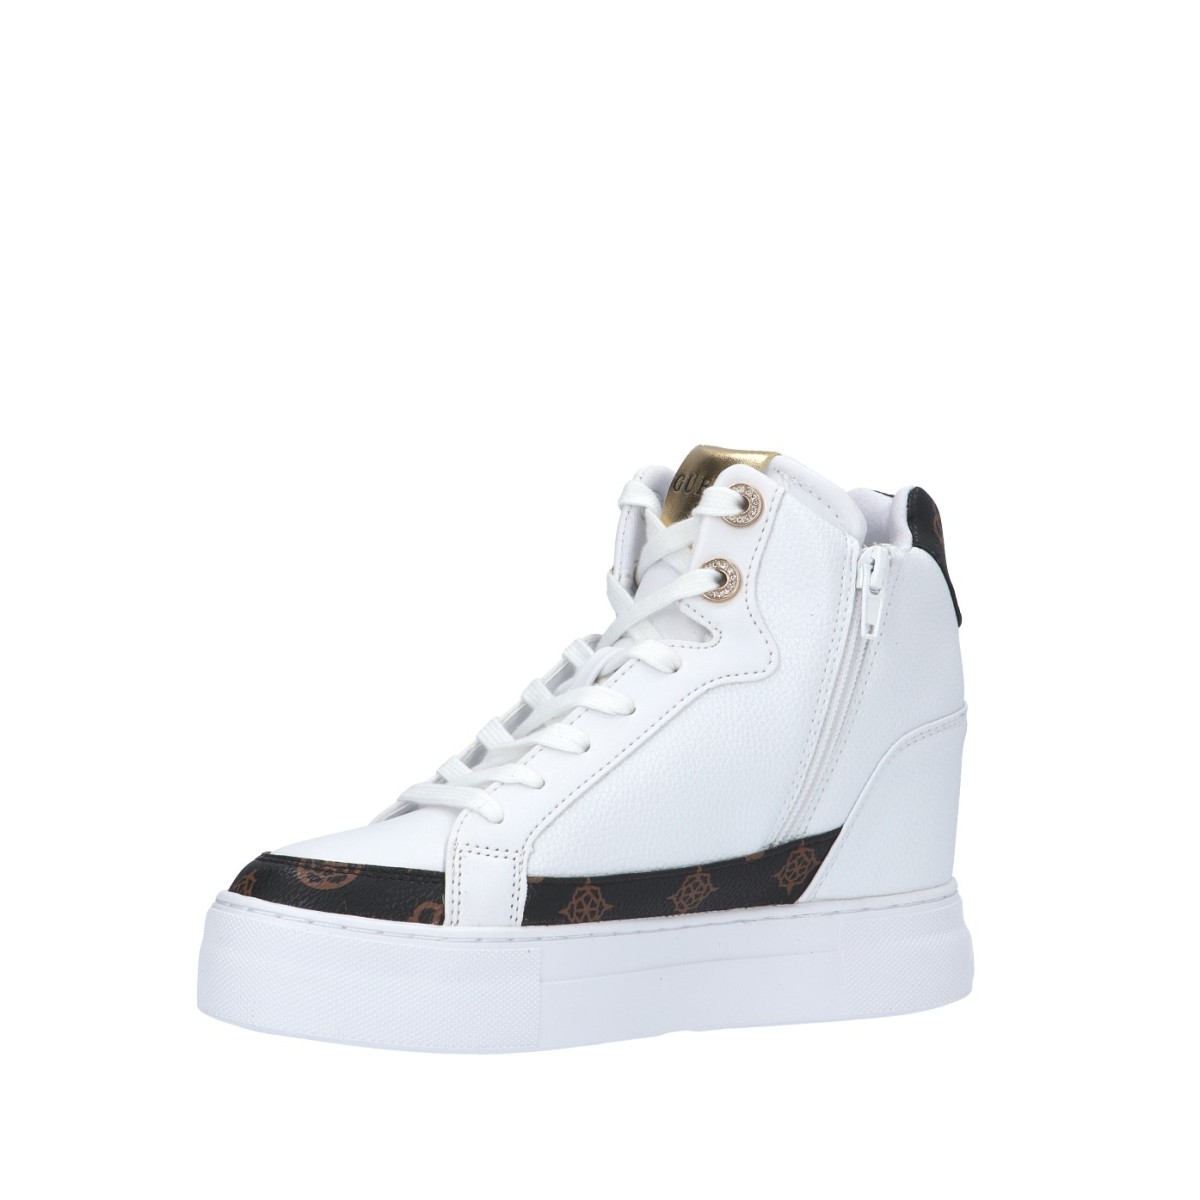 Guess Sneaker alta Bianco/marrone Gomma FL7FRIFAL12